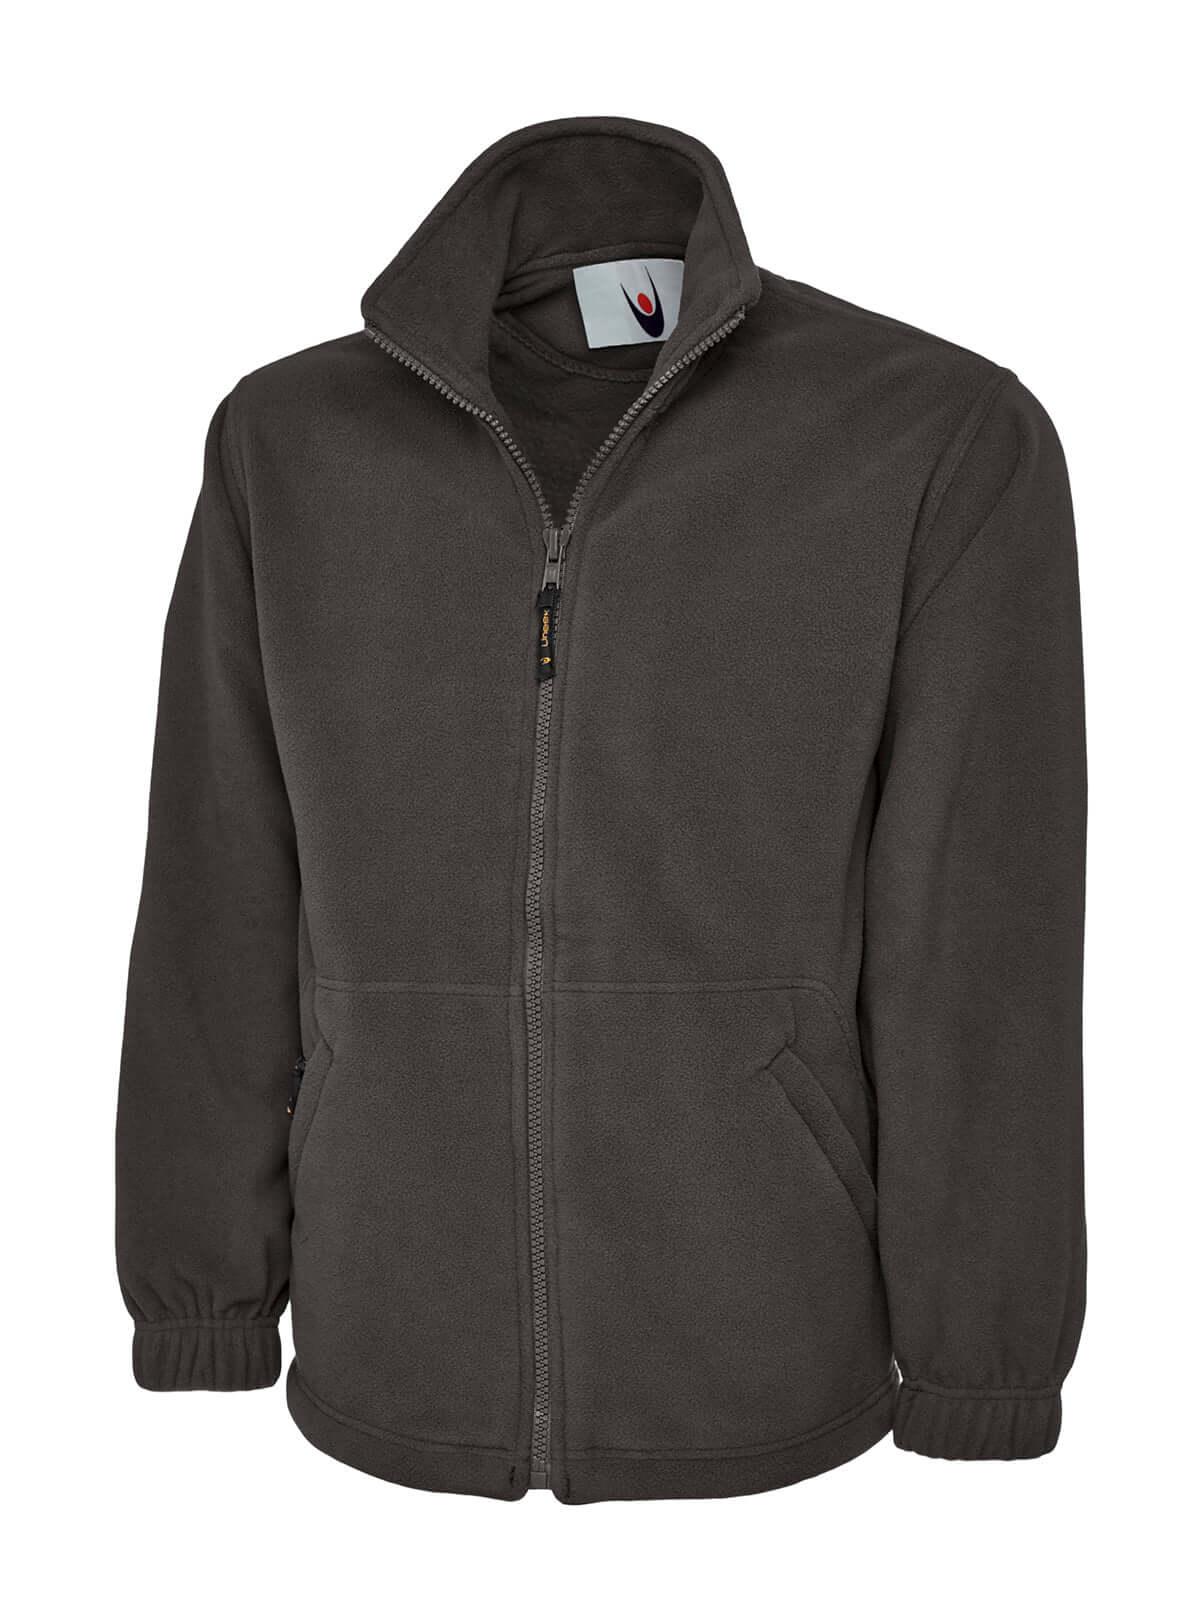 Pegasus Uniform Premium Full Zip Micro Fleece Jacket - Charcoal